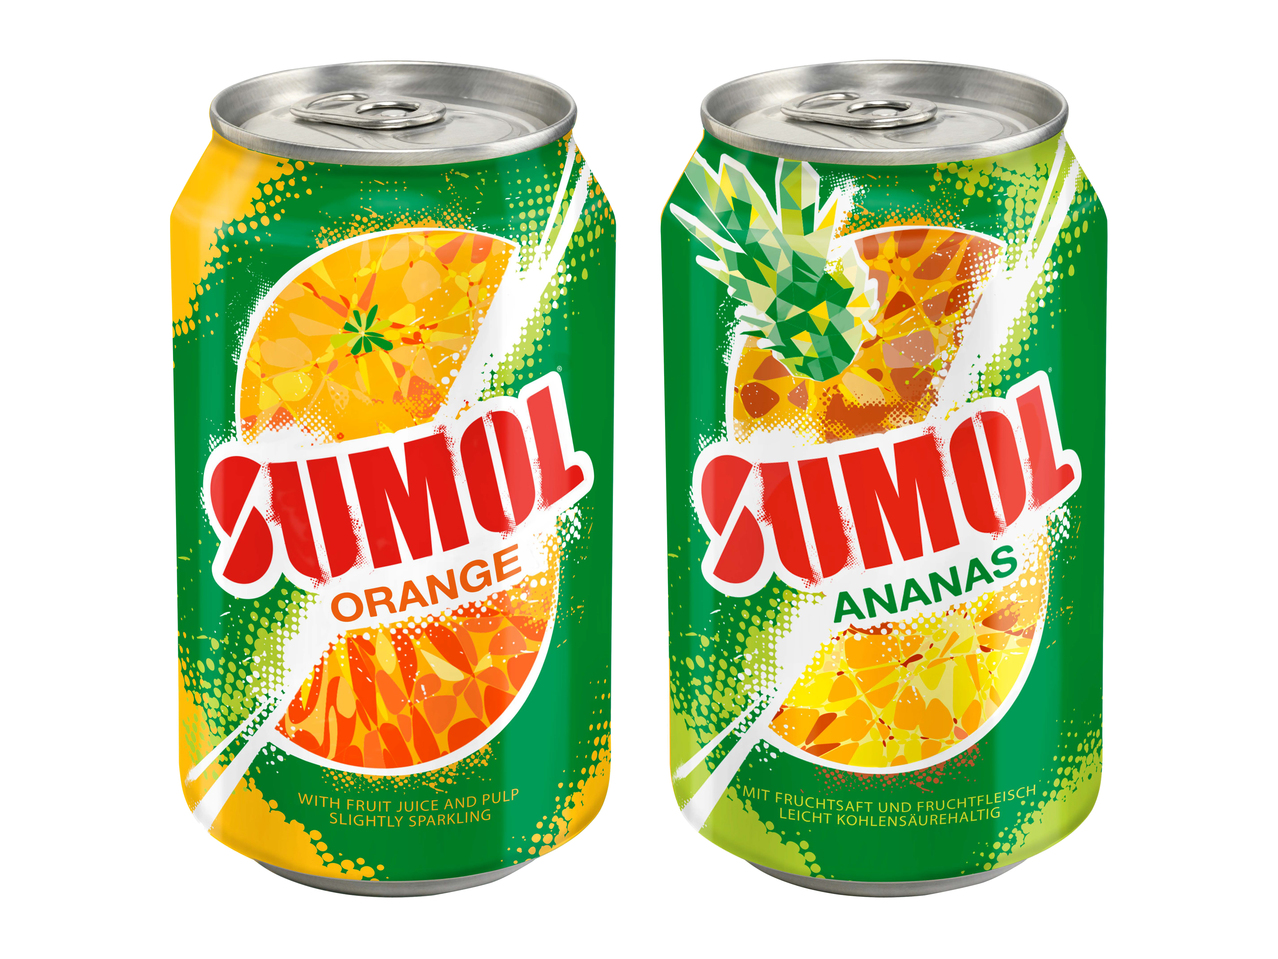 Sumol orange/ ananas